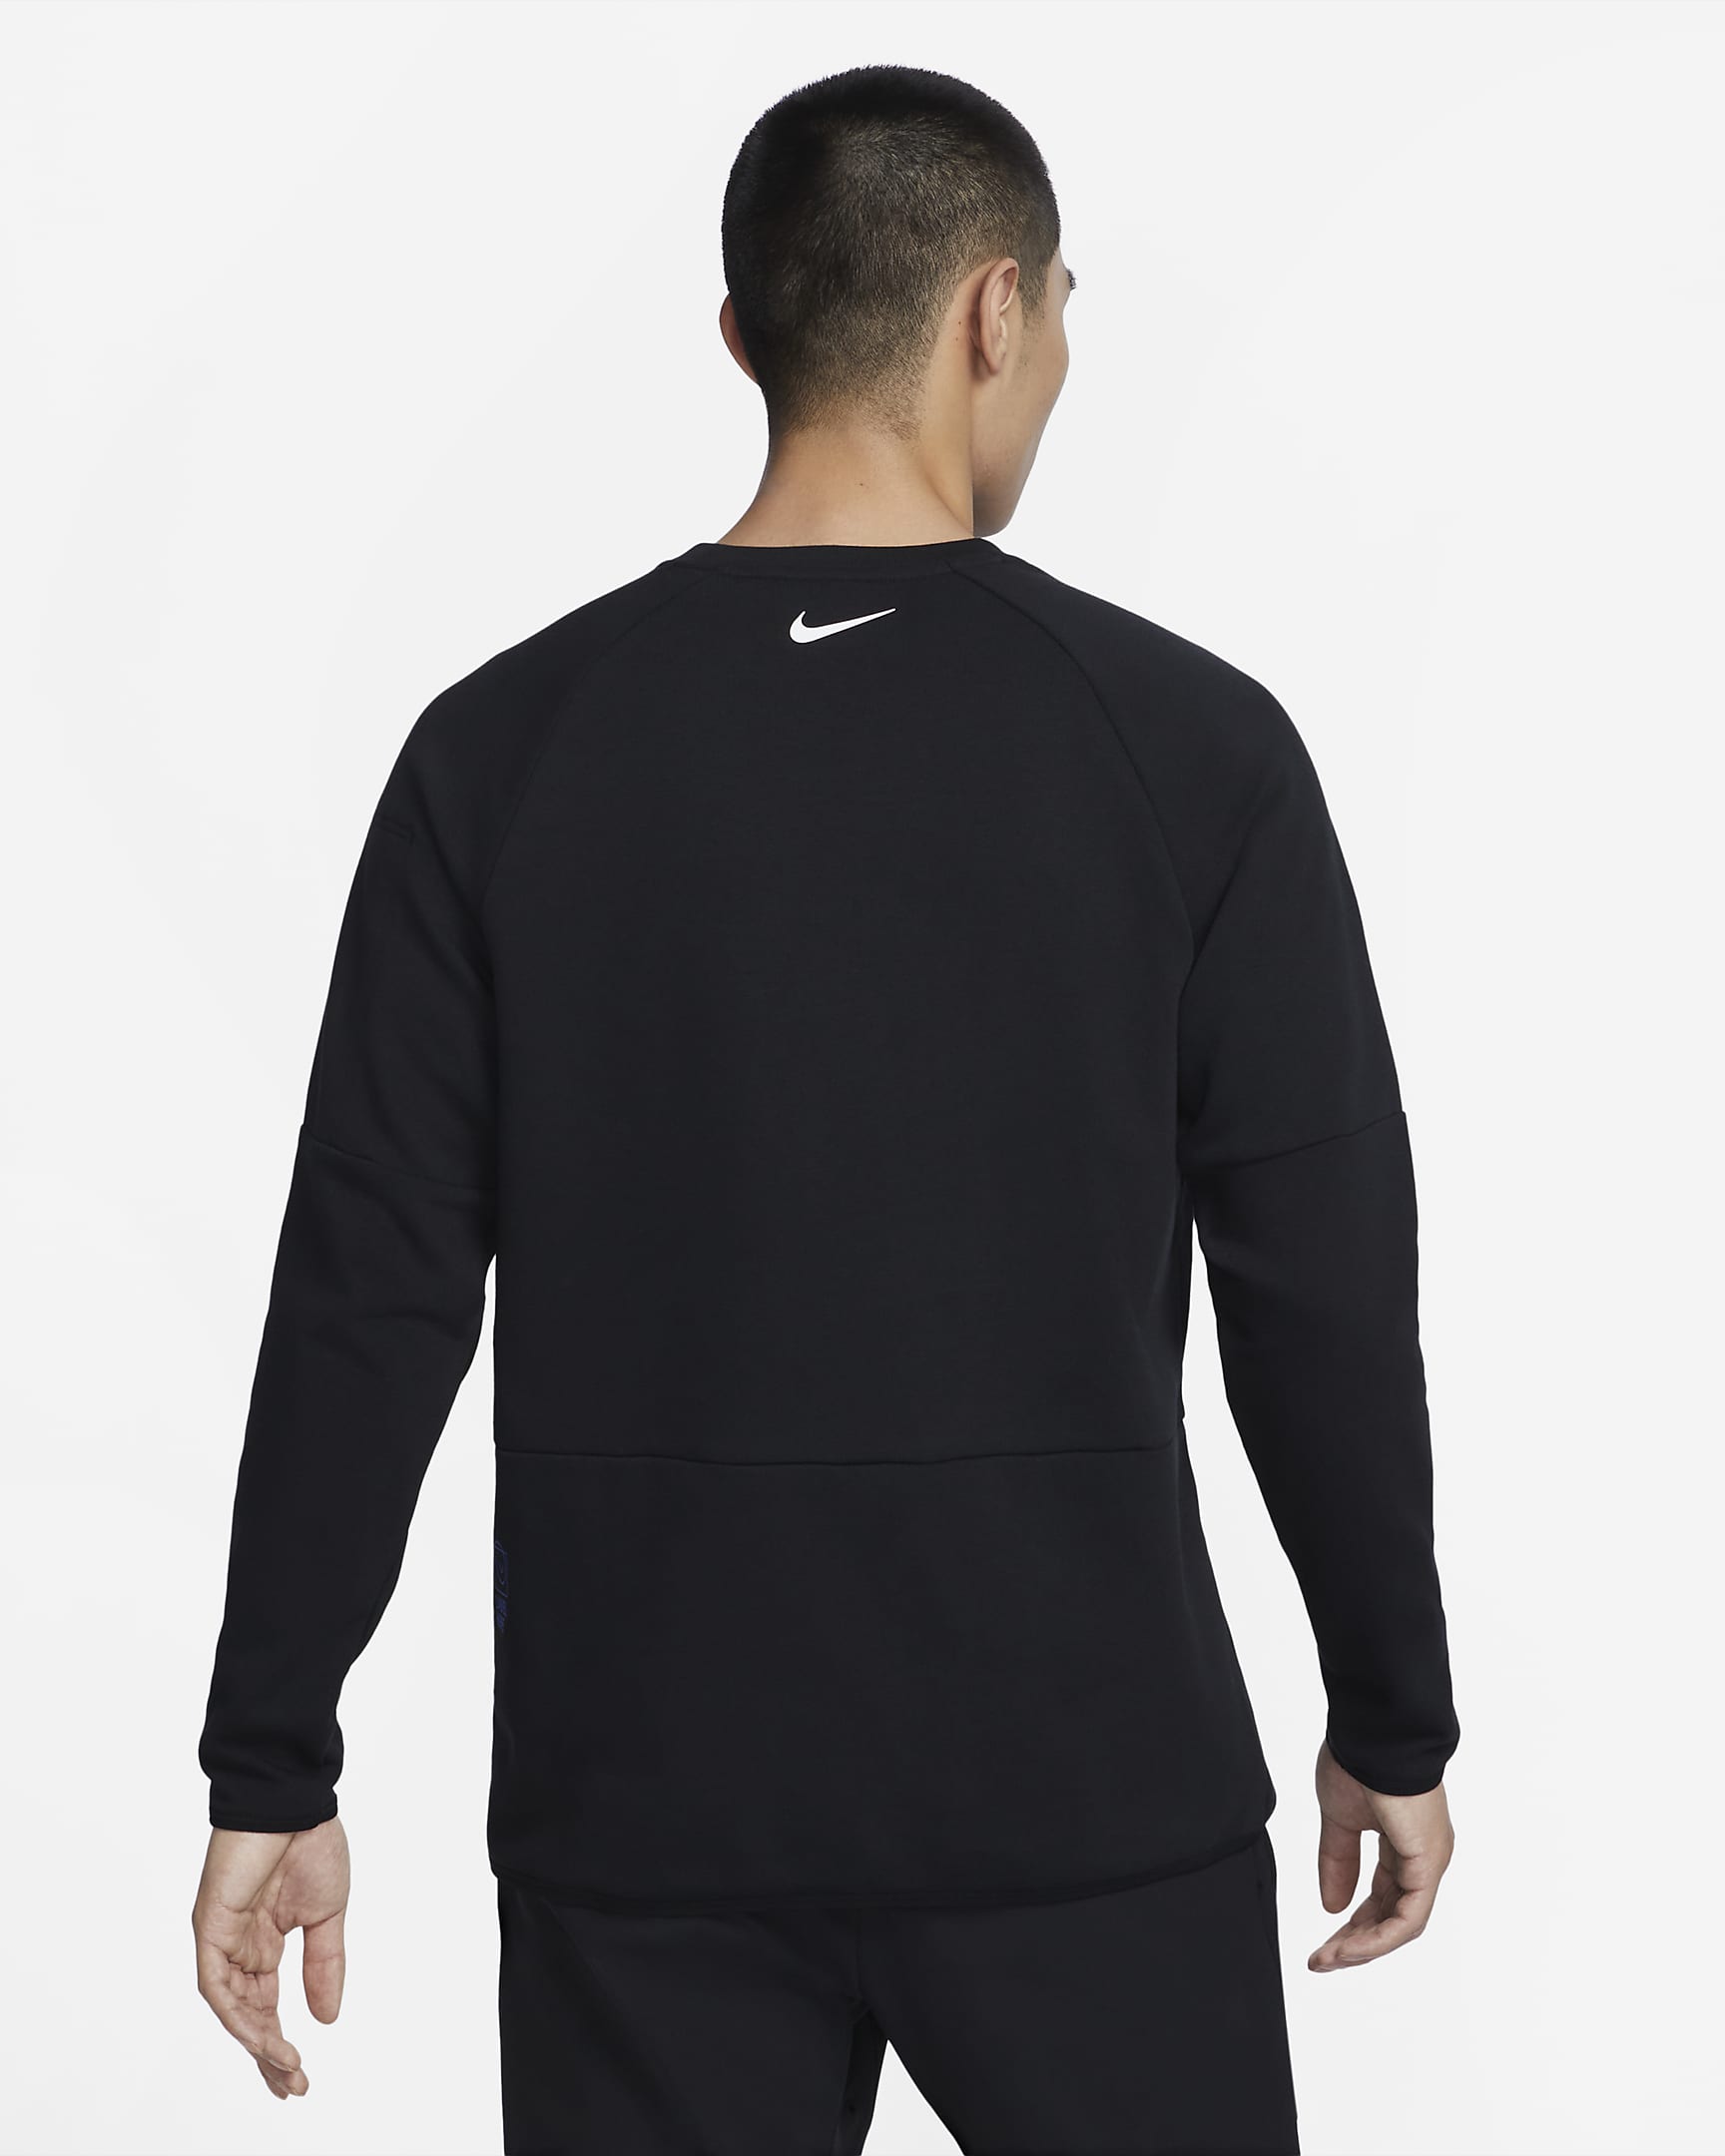 Nike Dri-FIT Men's Long-Sleeve Fitness Top. Nike VN